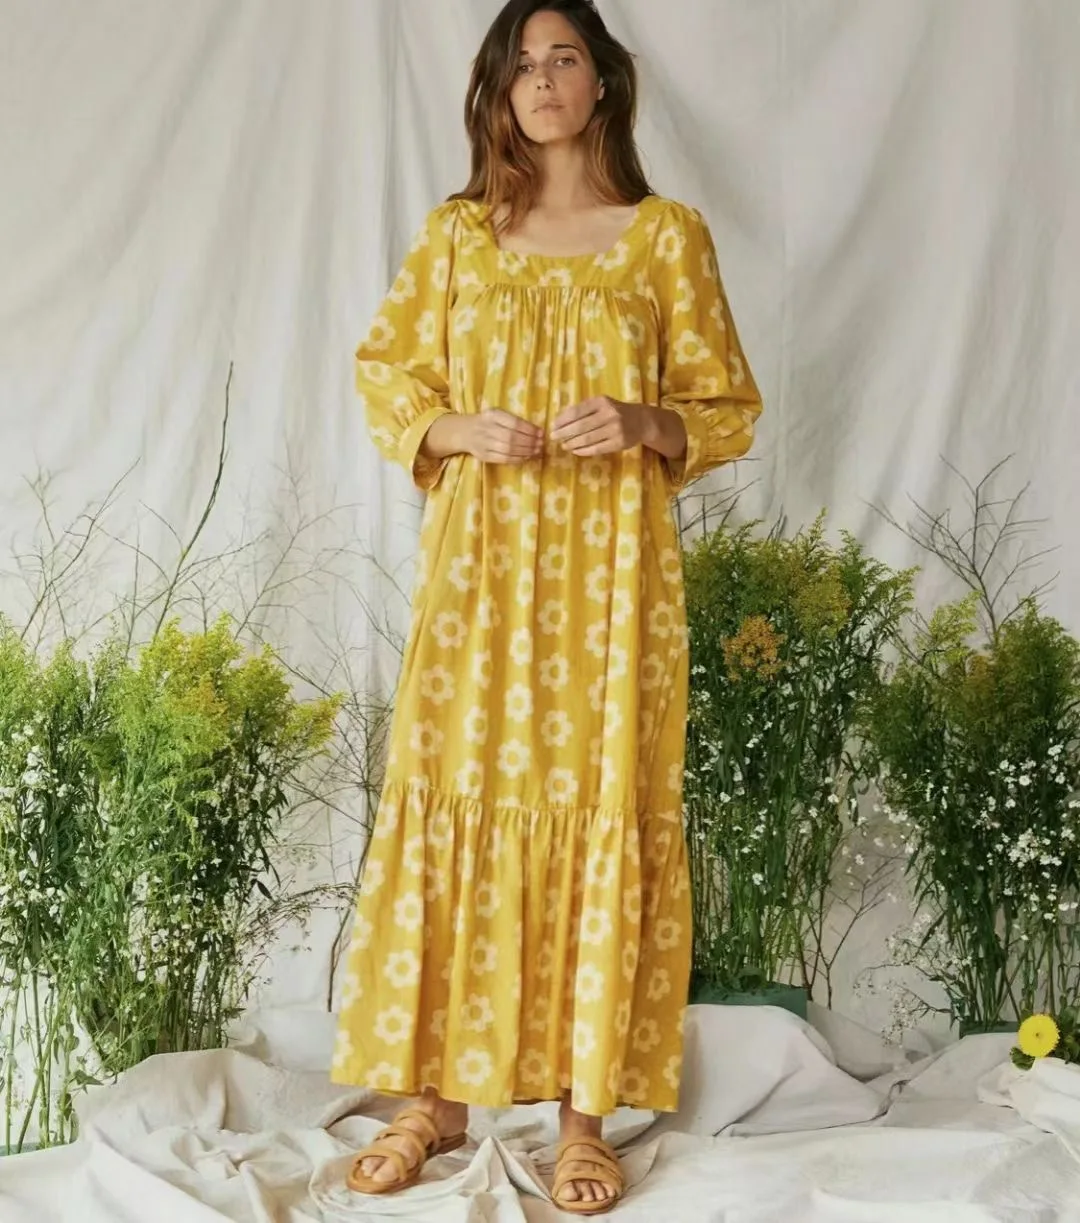 2023 New Yellow Sunflower Print Square Collar Organic Cotton Lace Up Long Loose Dress Women